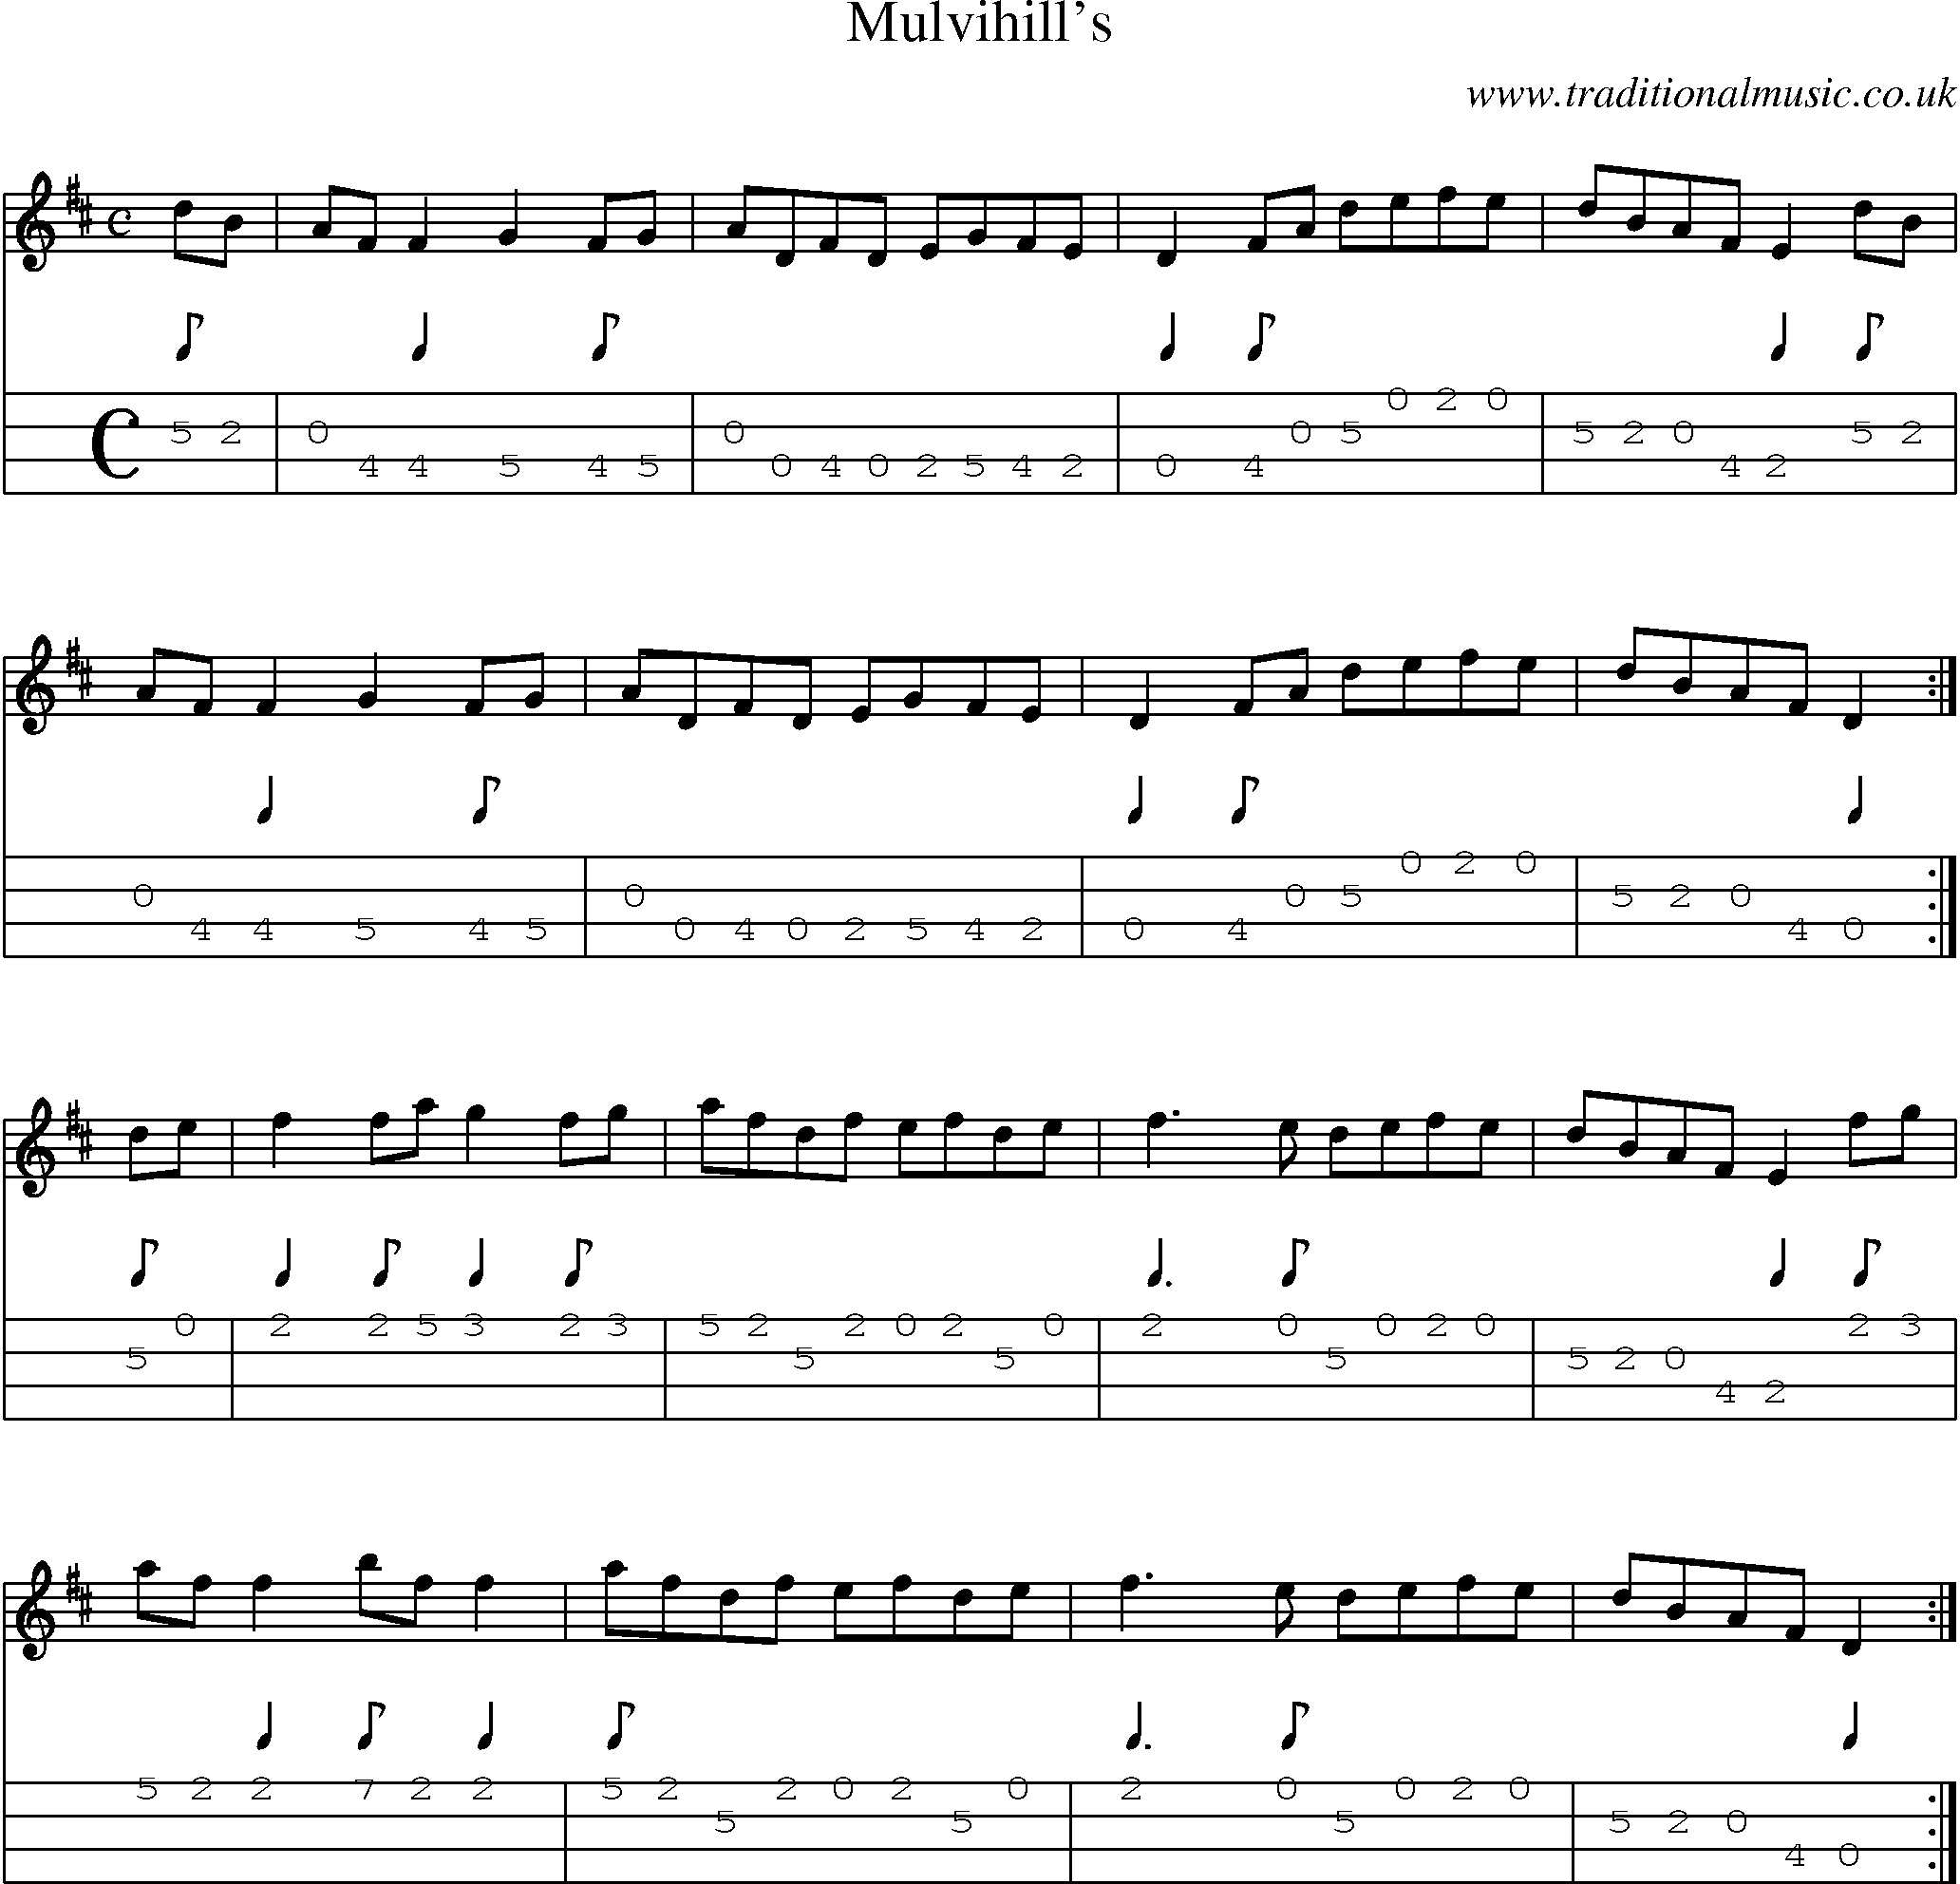 Music Score and Mandolin Tabs for Mulvihills